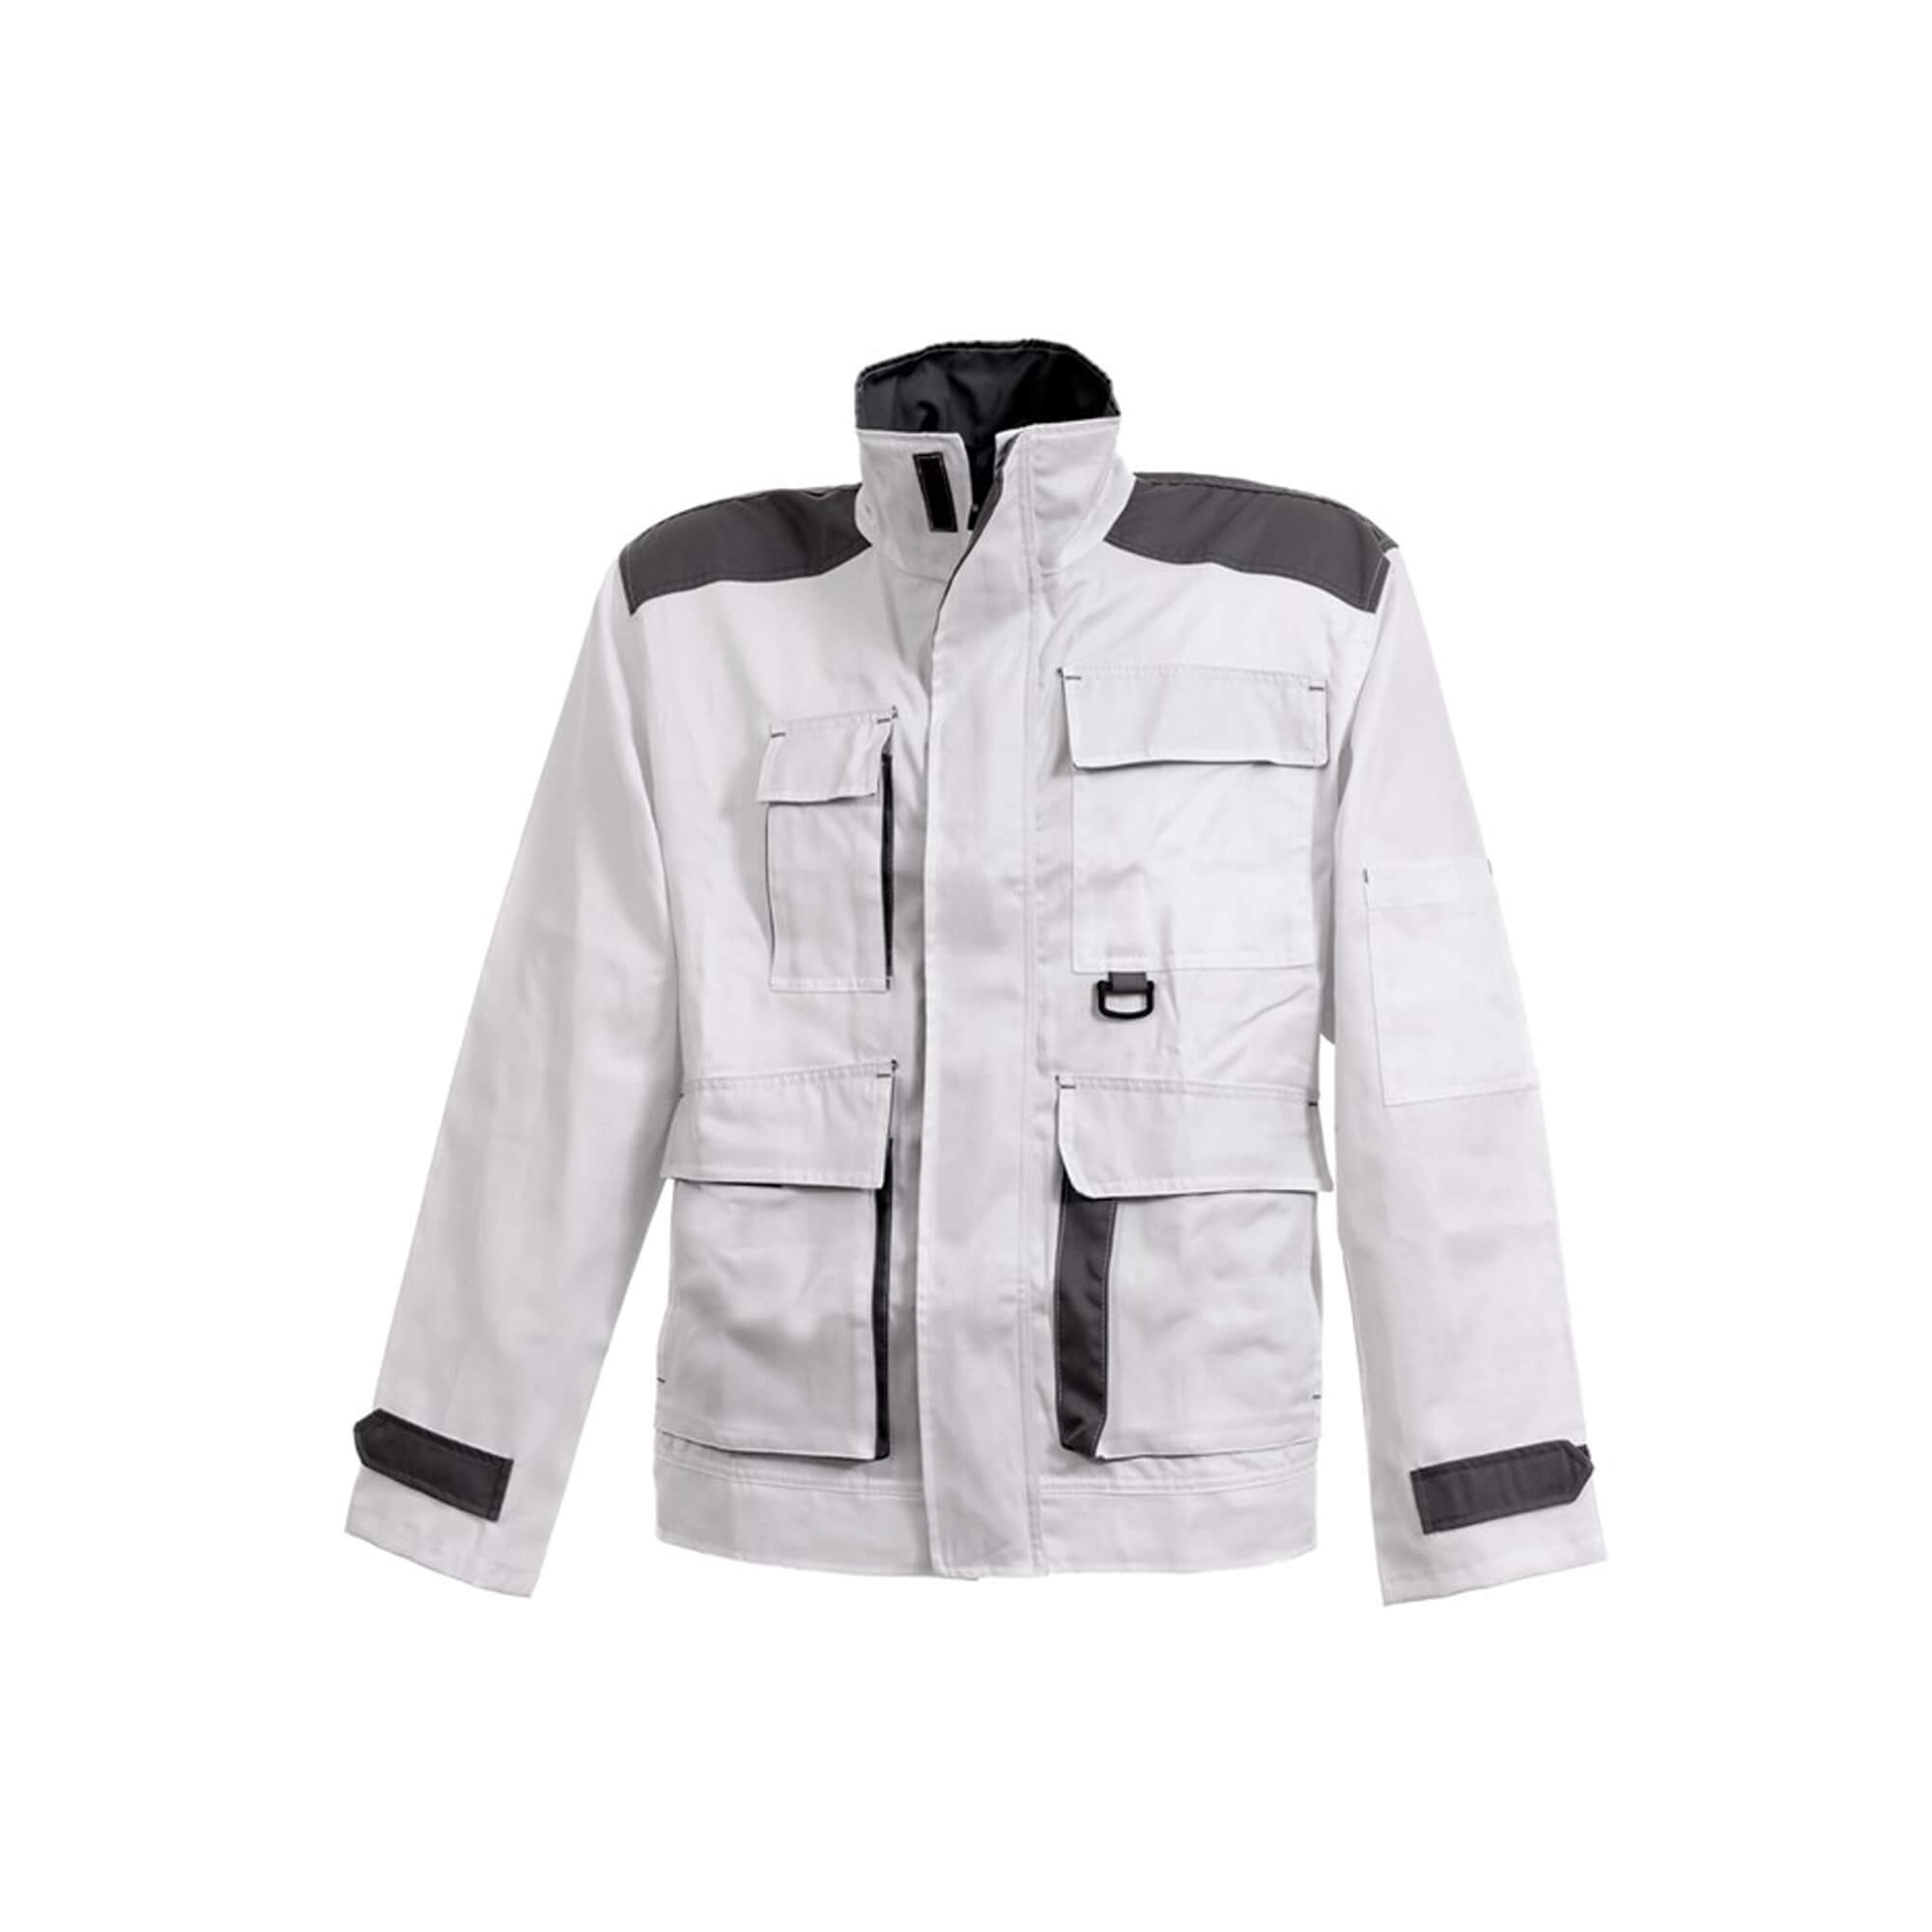 Work jacket Spektar, white color